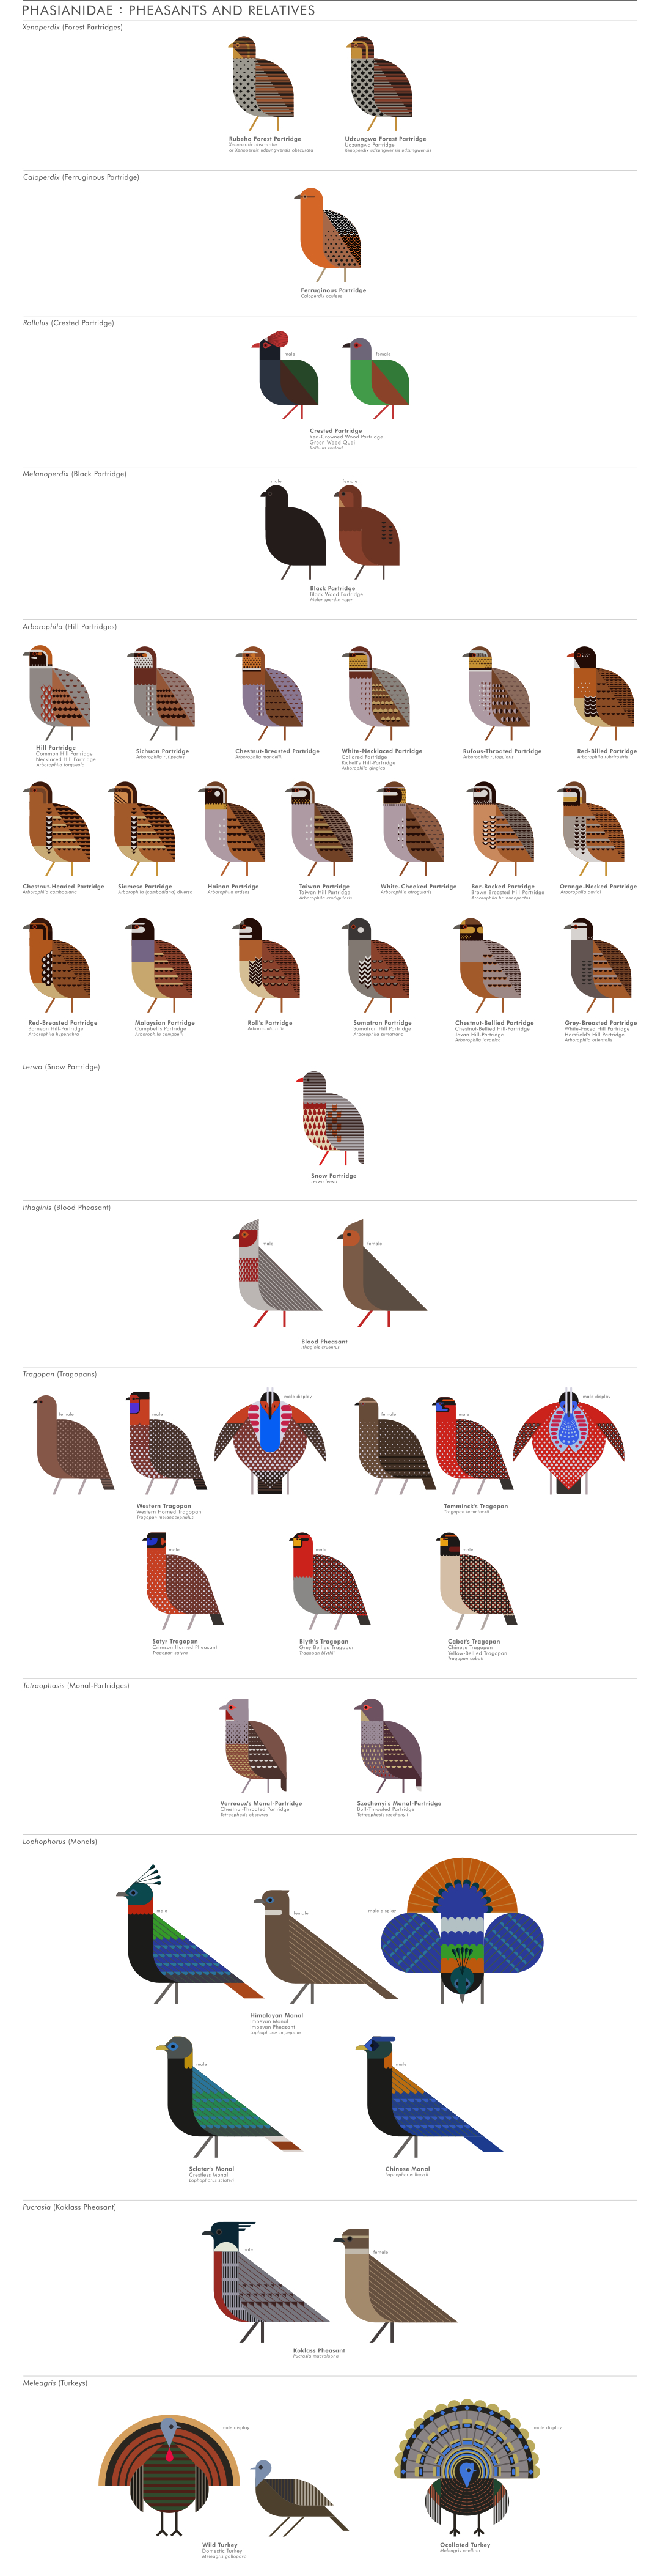 scott partridge - ave - avian vector encyclopedia - phasianidae - bird vector art